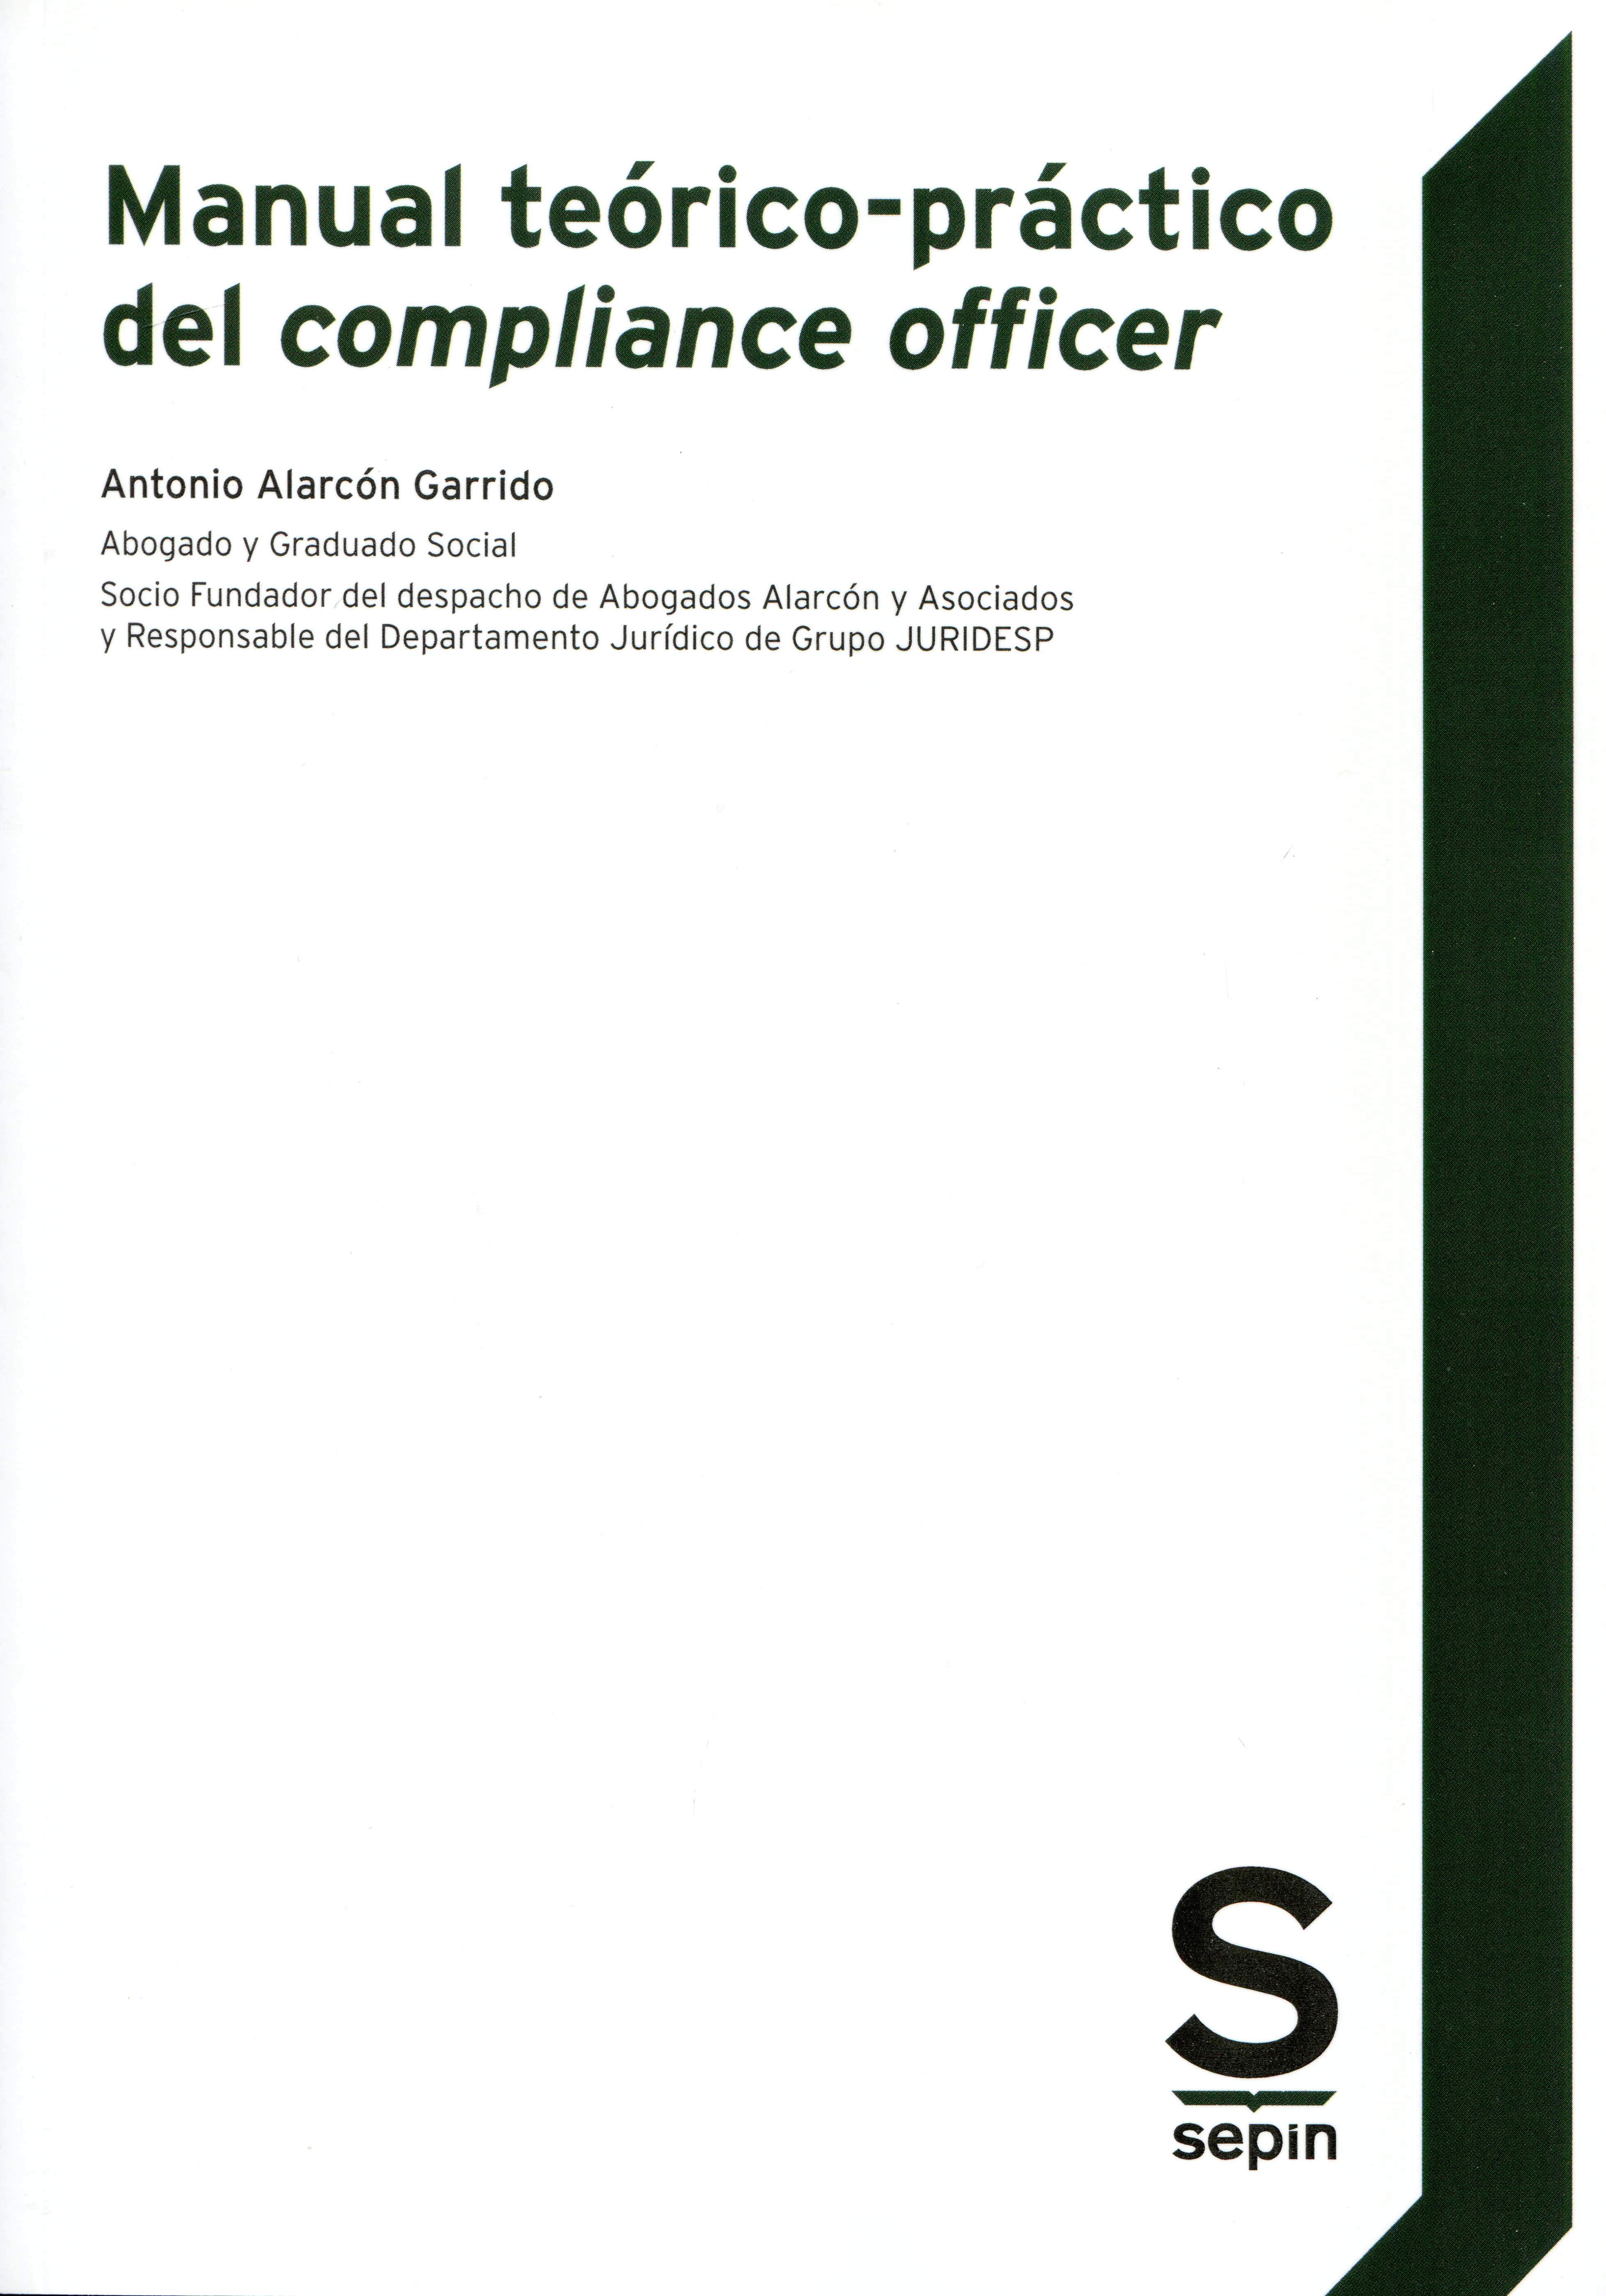 Manual teórico-práctico del compliance officer